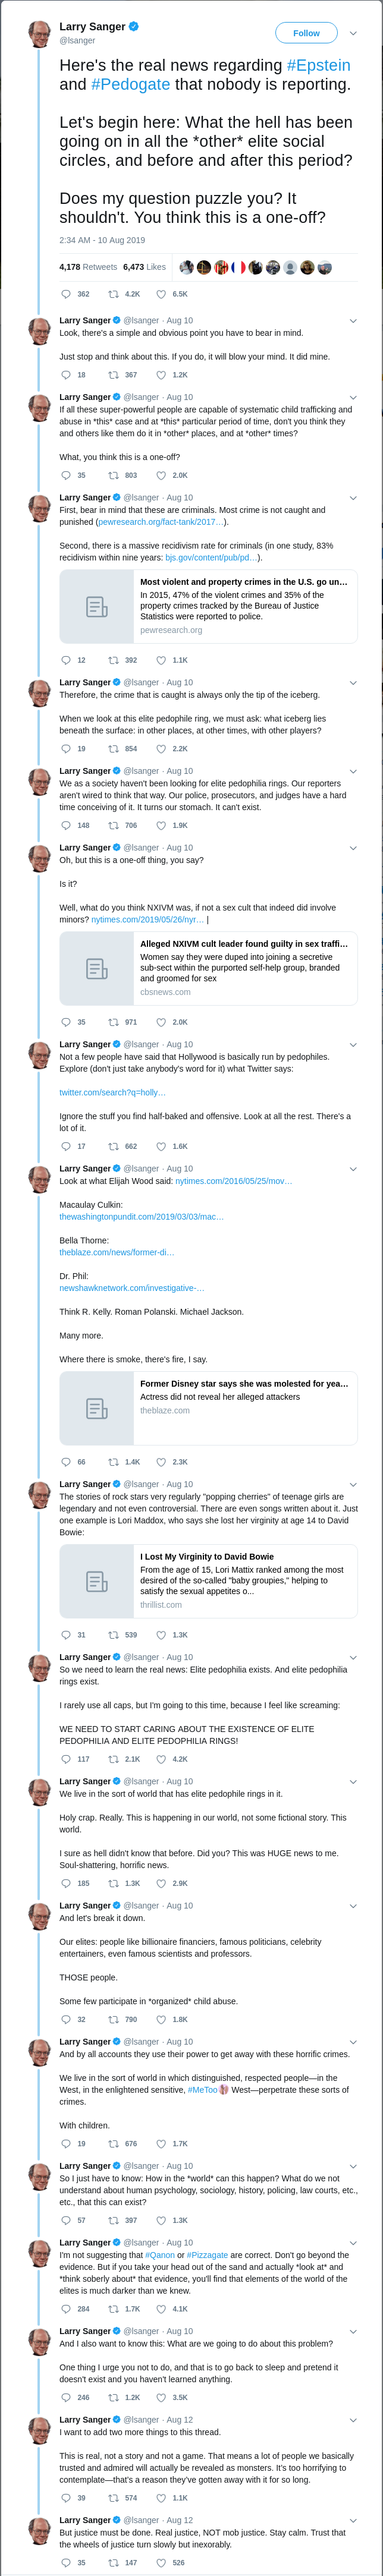 Larry_Sanger-Epstein_Twitter_commentary.png